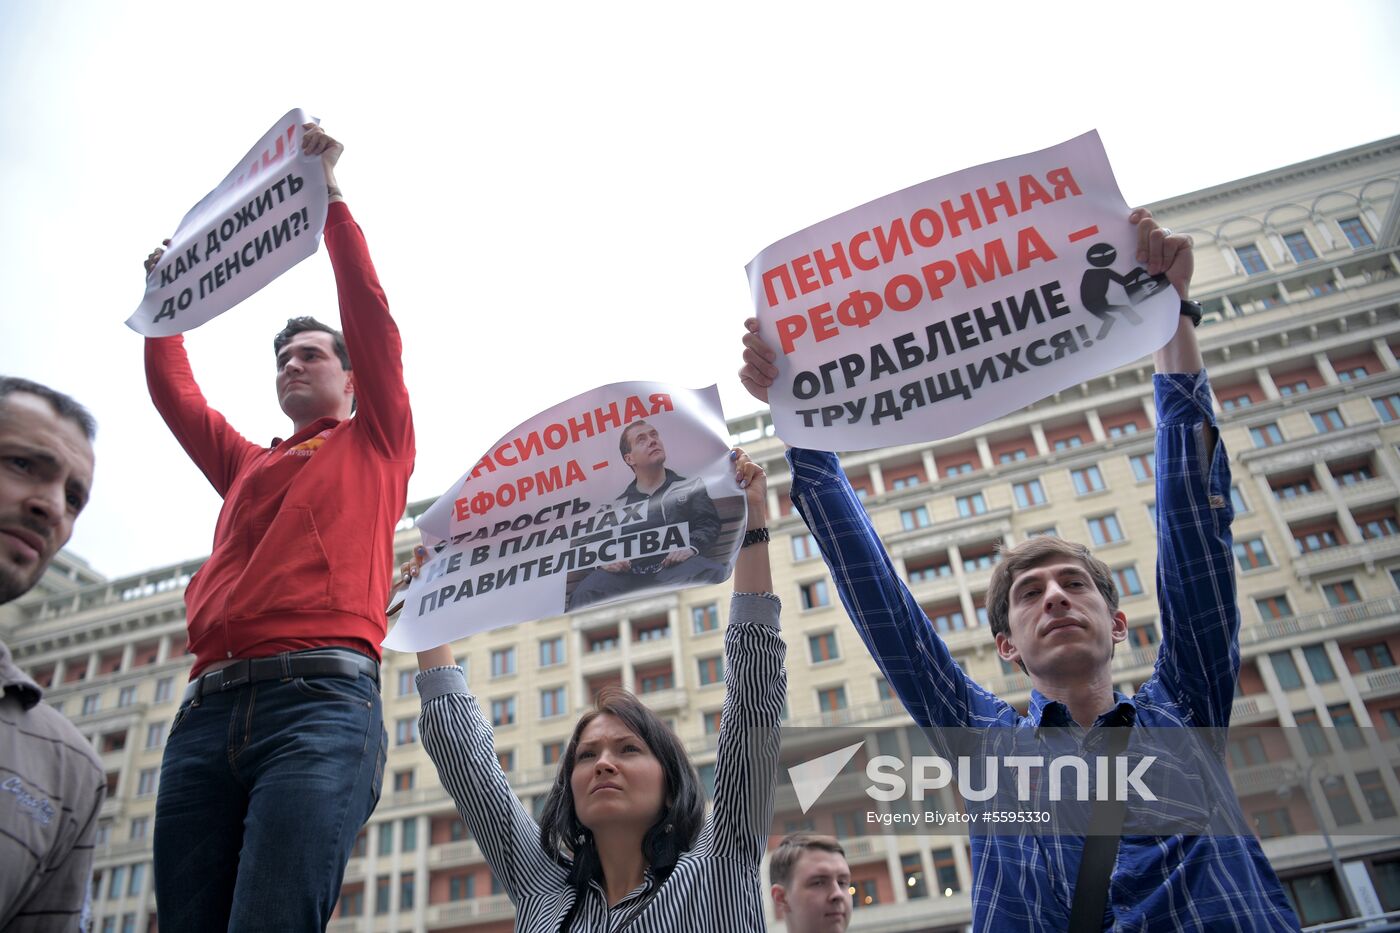 Protest against pension reform